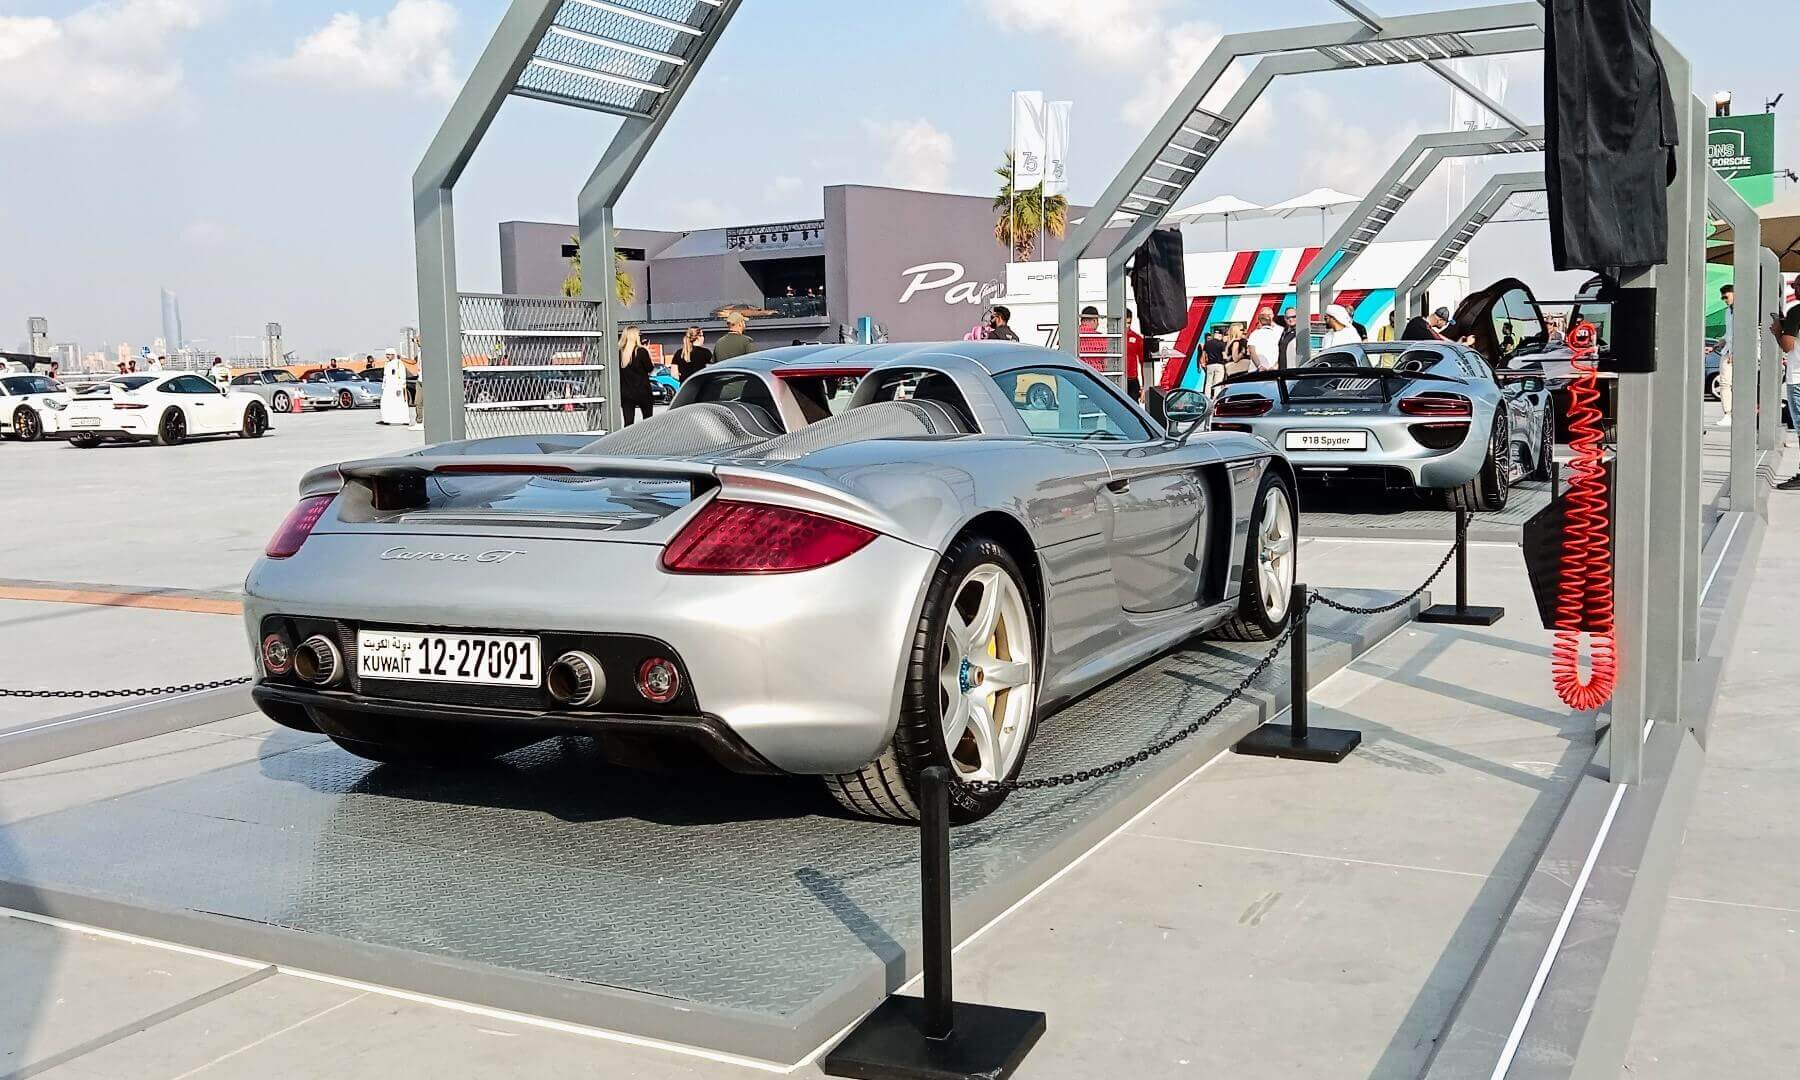 Icons of Porsche 2023